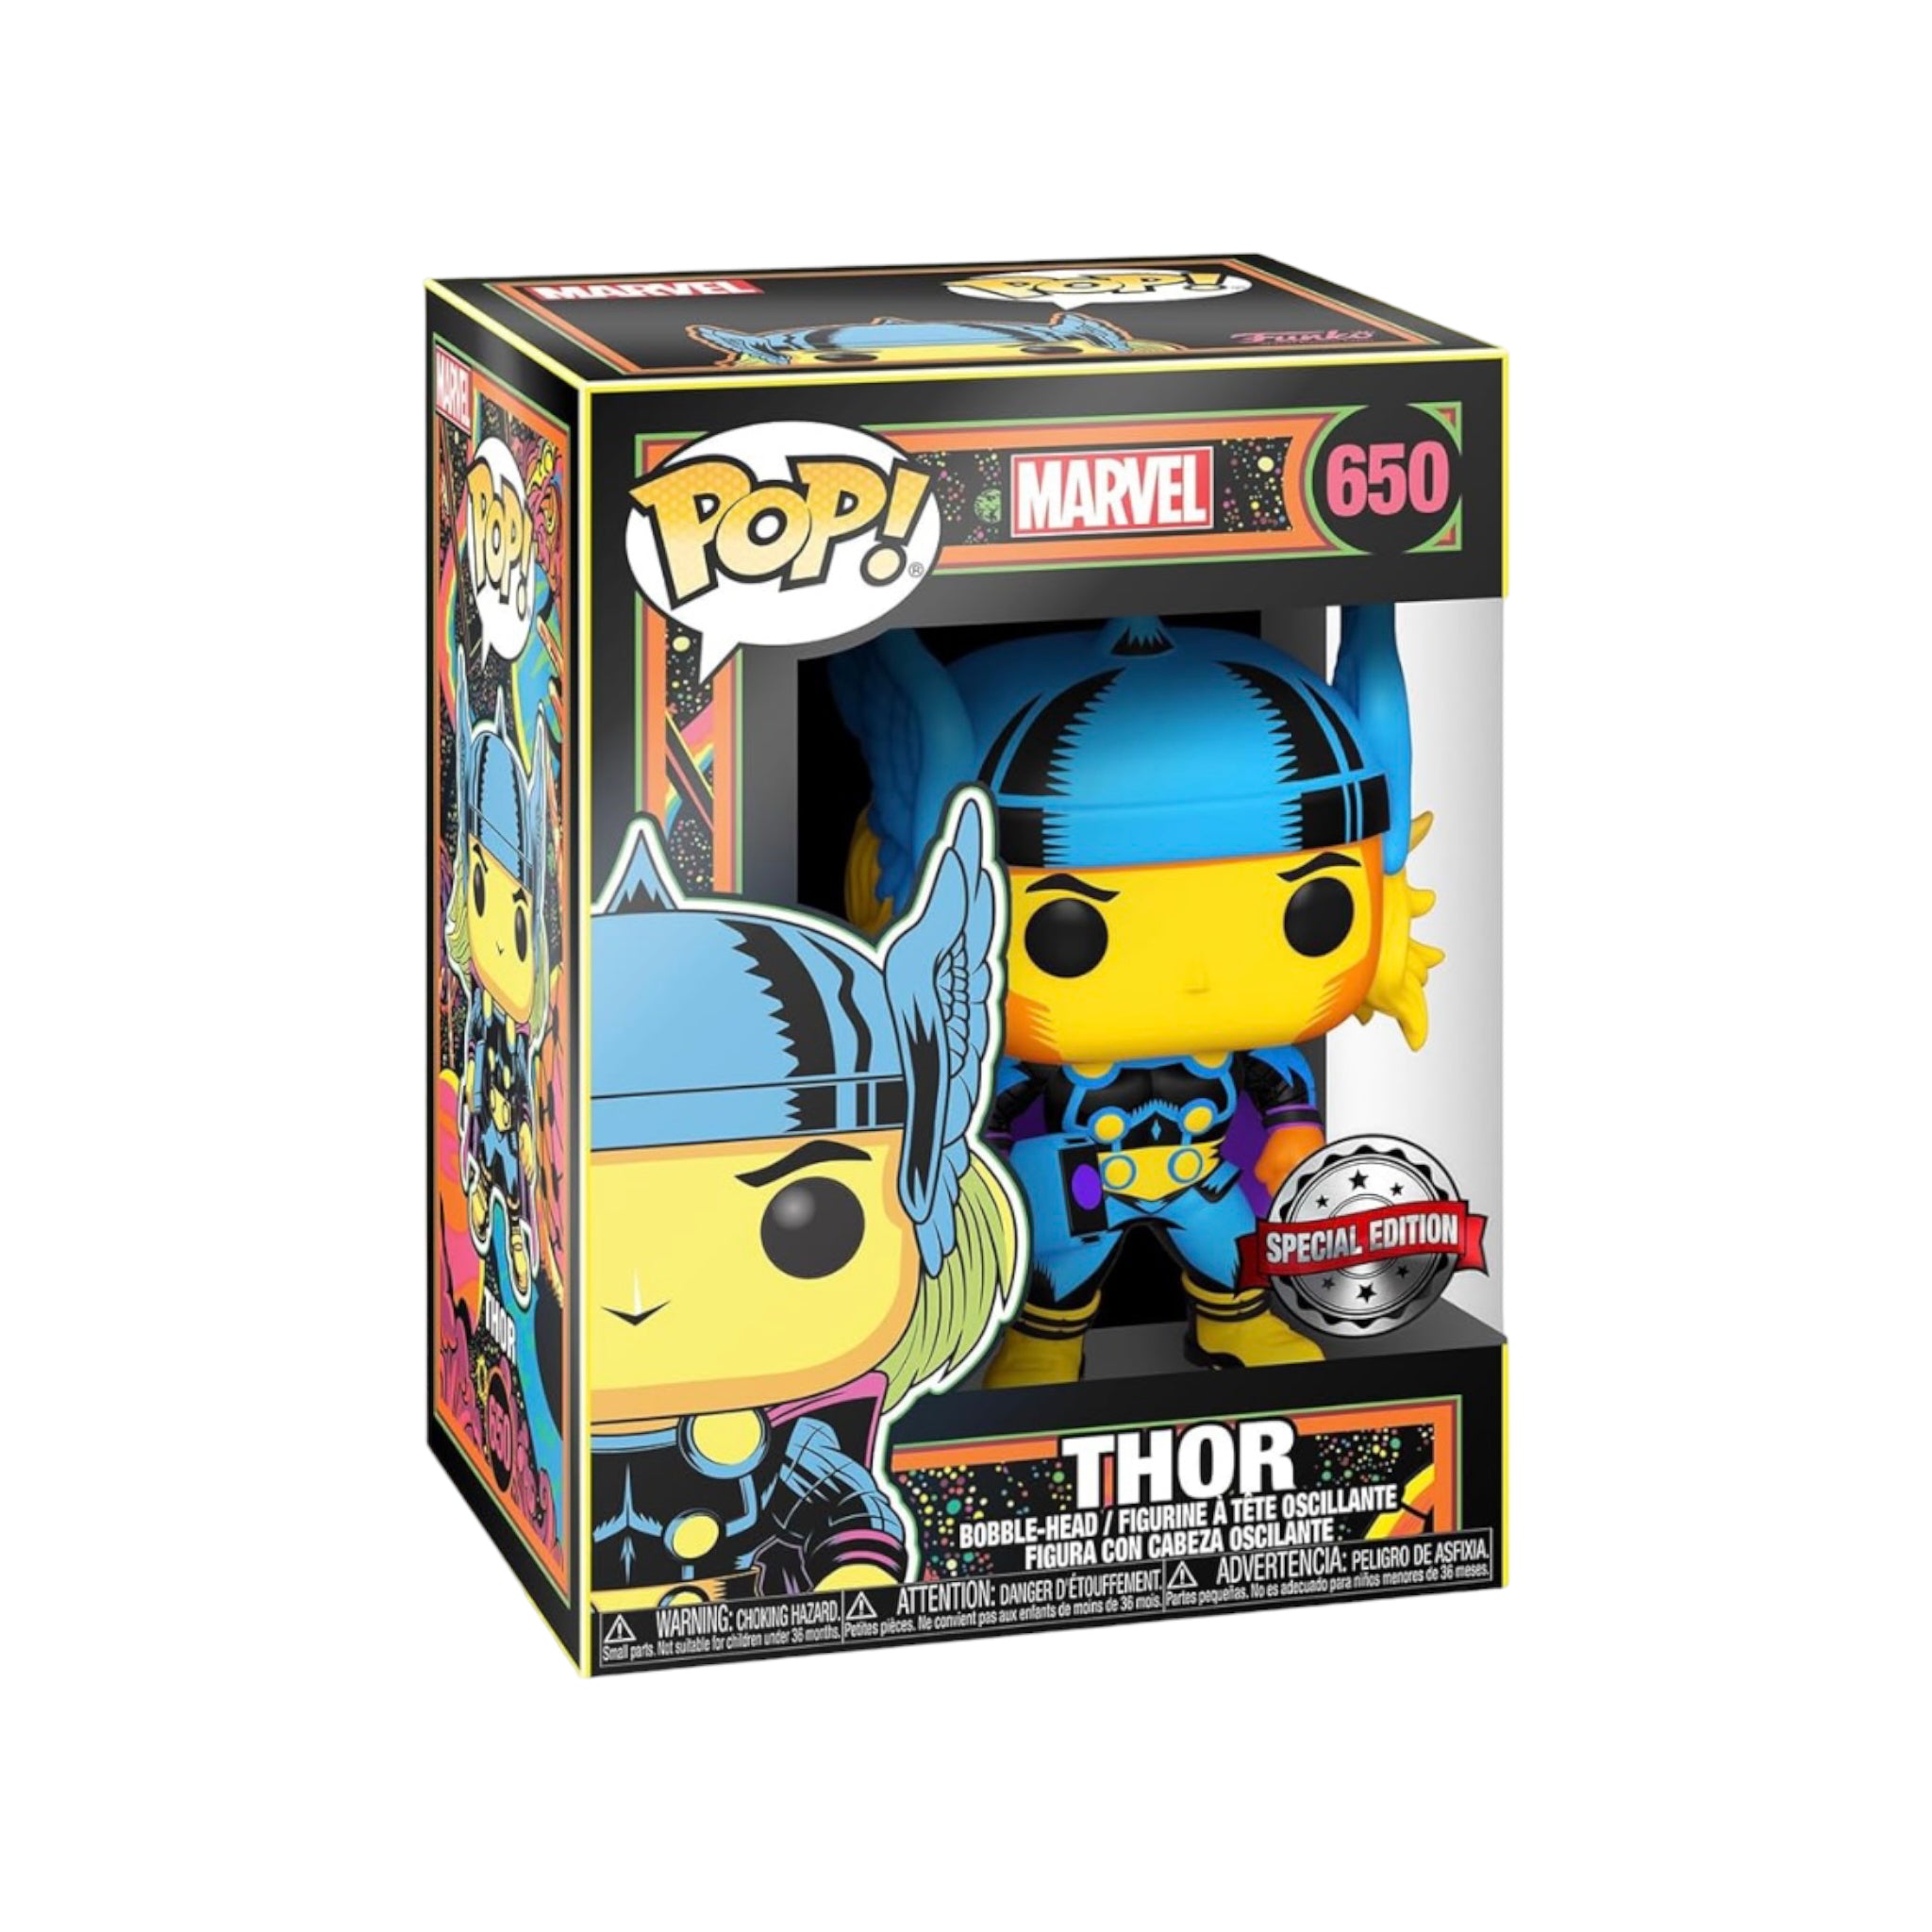 Thor #650 (Black Light) Funko Pop! - Marvel - Special Edition